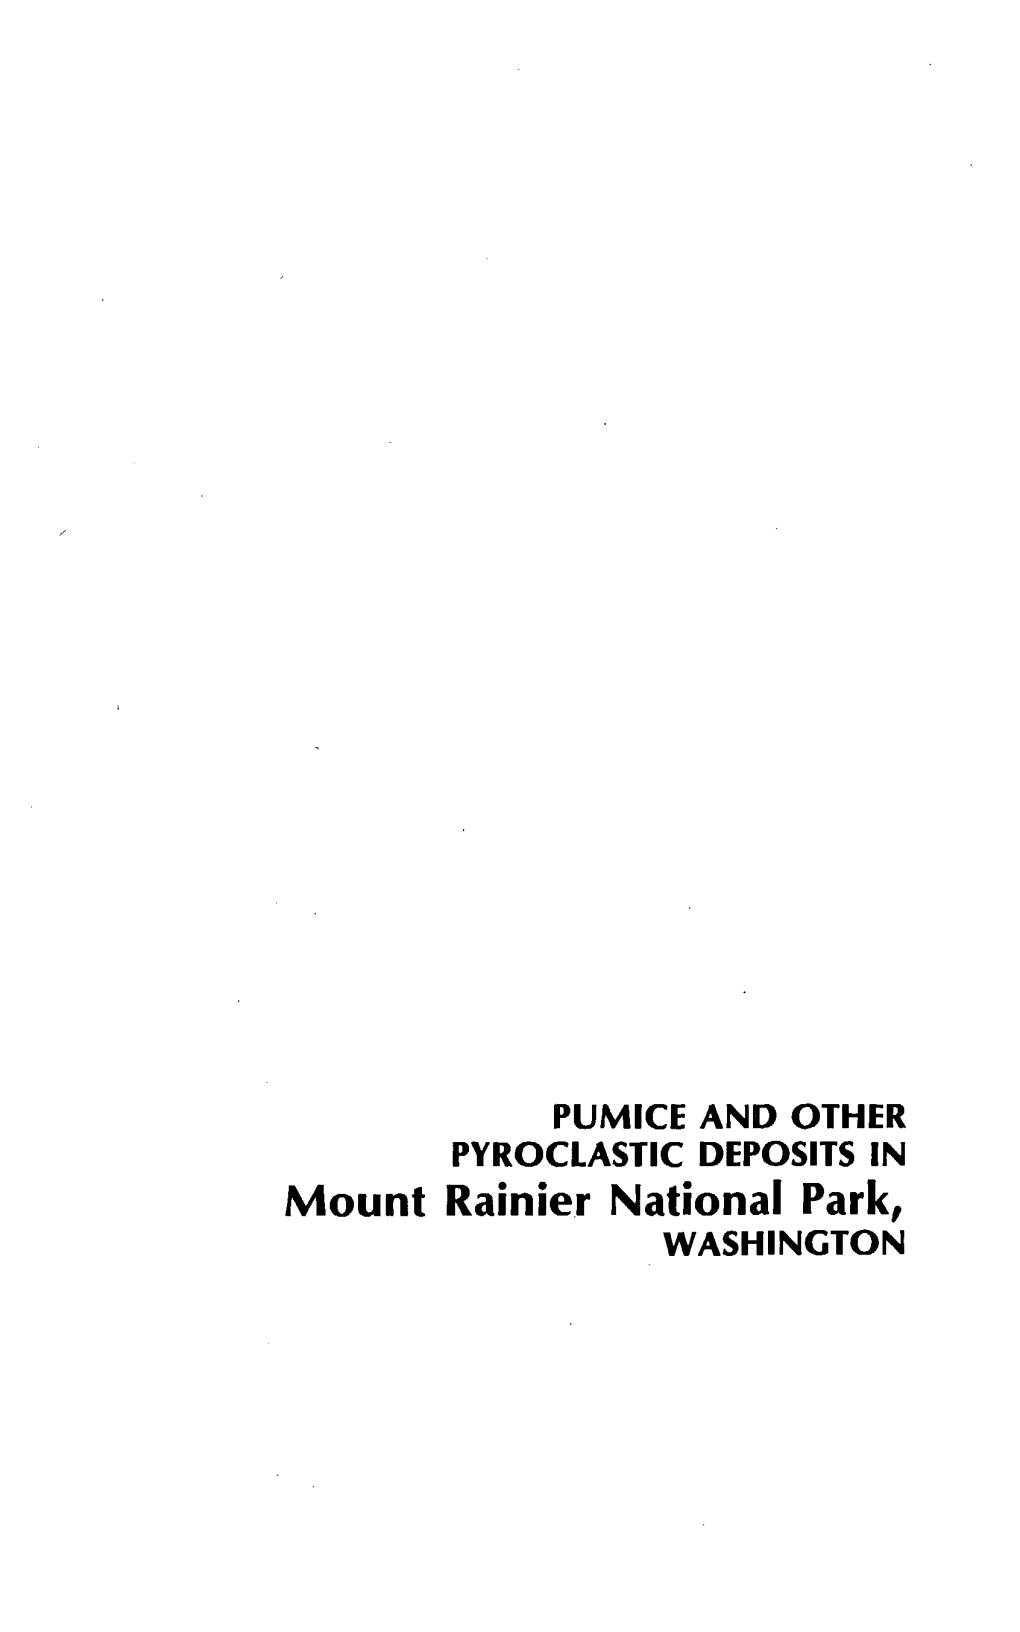 Mount Rainier National Park, WASHINGTON TEP~RJ\ ~EF's ' in Mount Rainier National Park